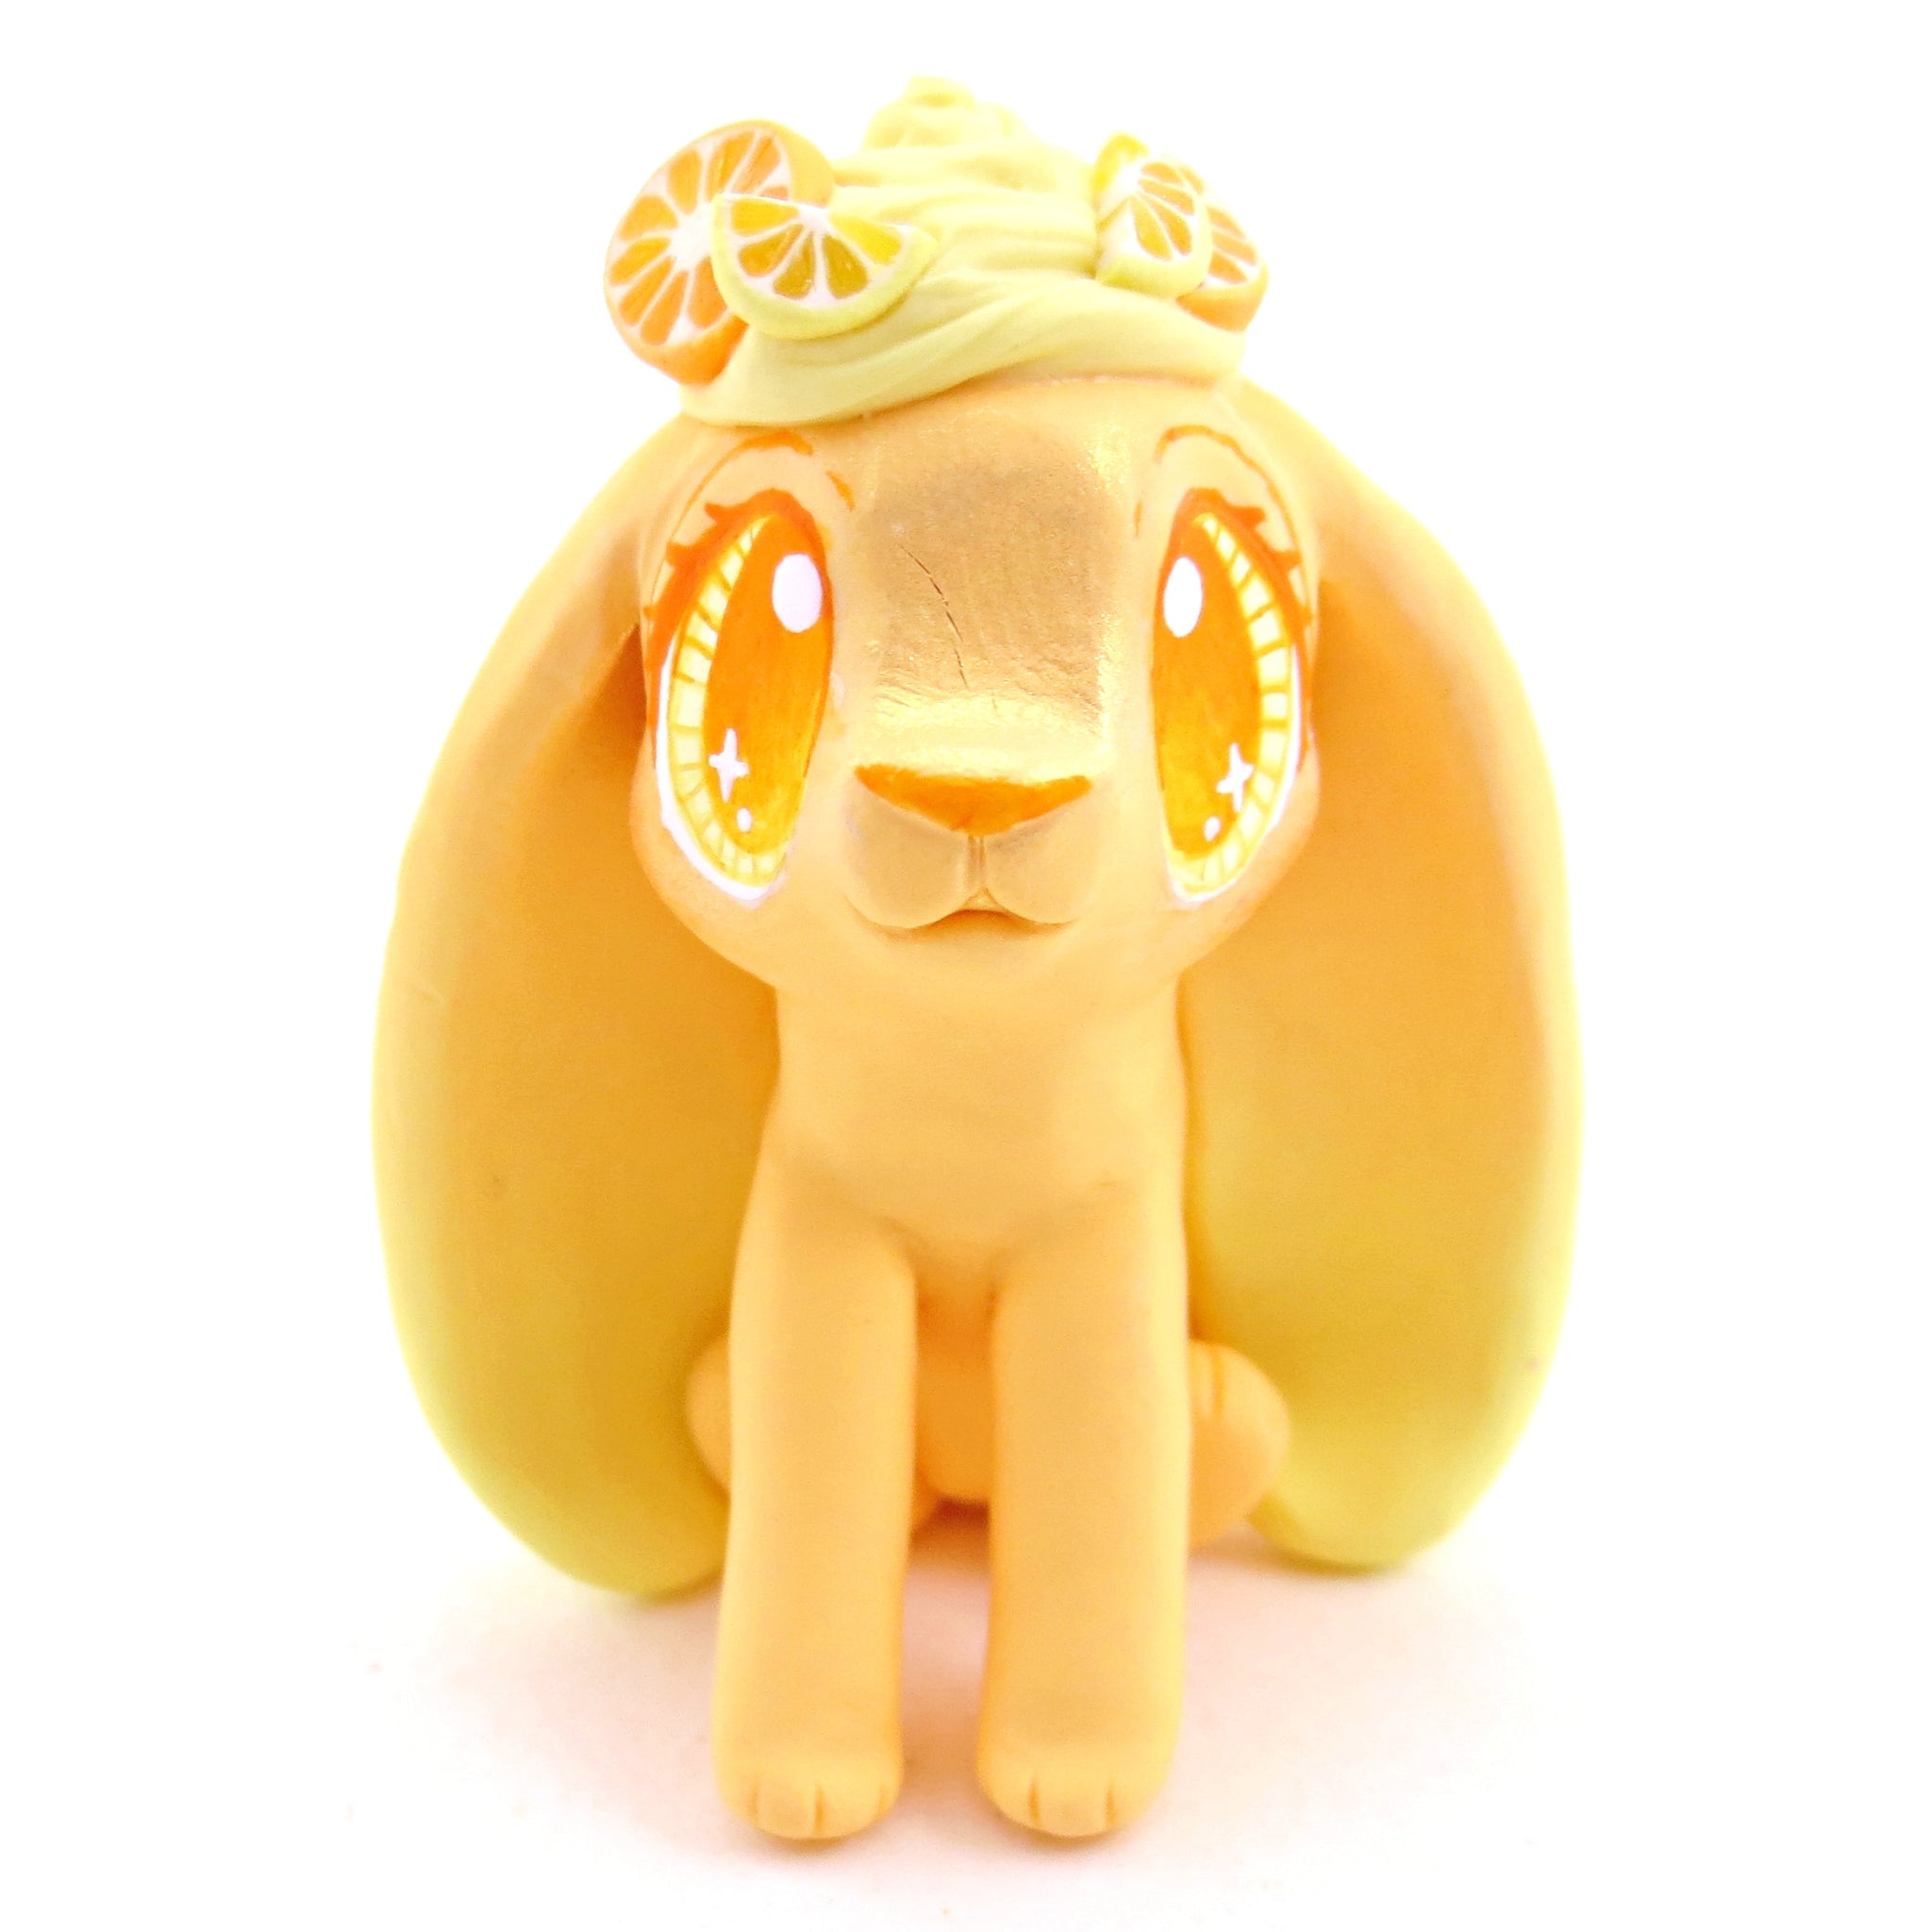 Citrus Lemon and Orange Bunny - Polymer Clay Fruity Cuties Animals